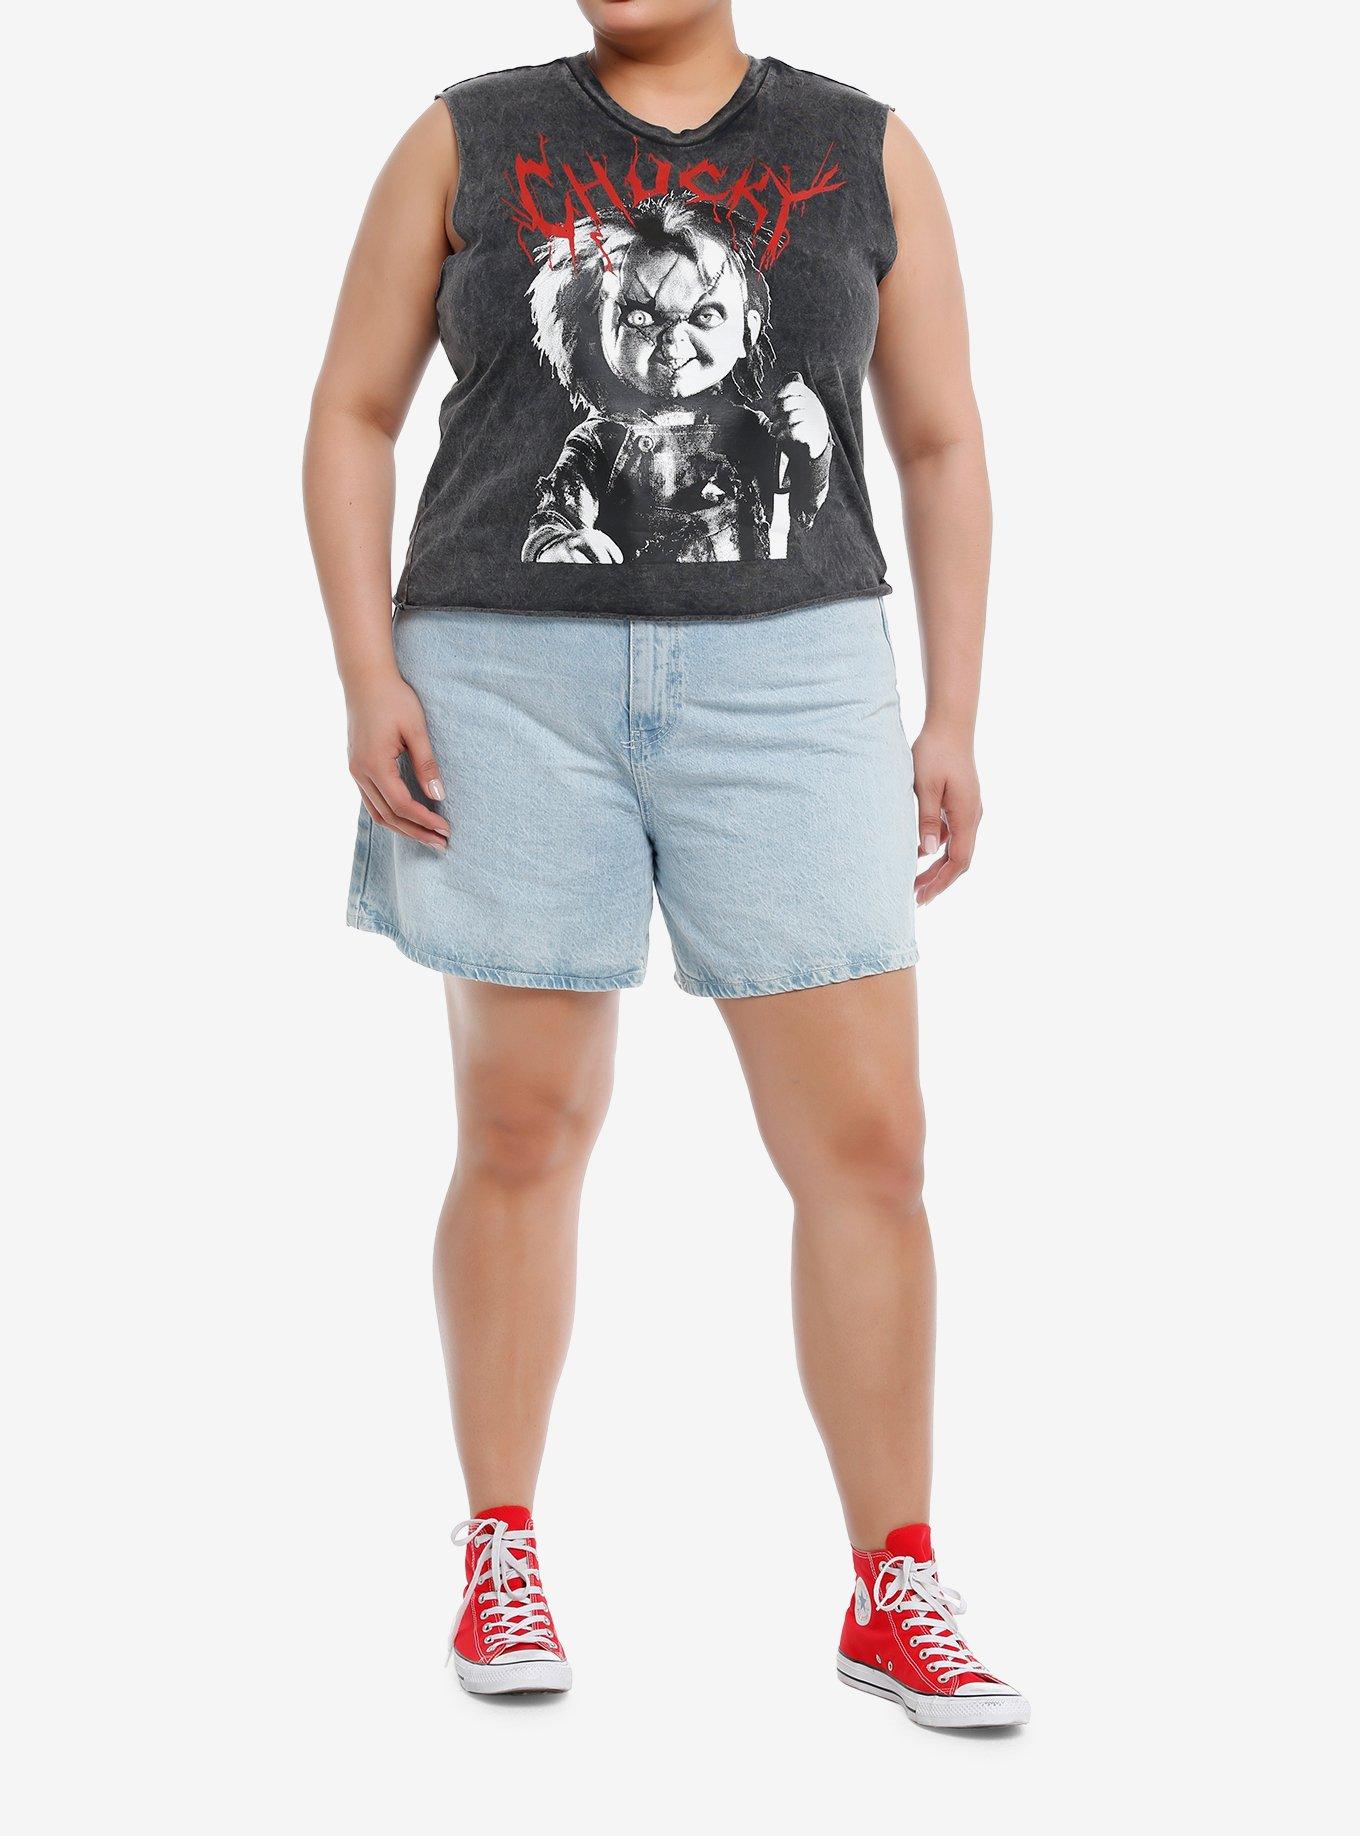 Chucky Jumbo Graphic Girls Muscle Tank Top Plus Size, MULTI, alternate